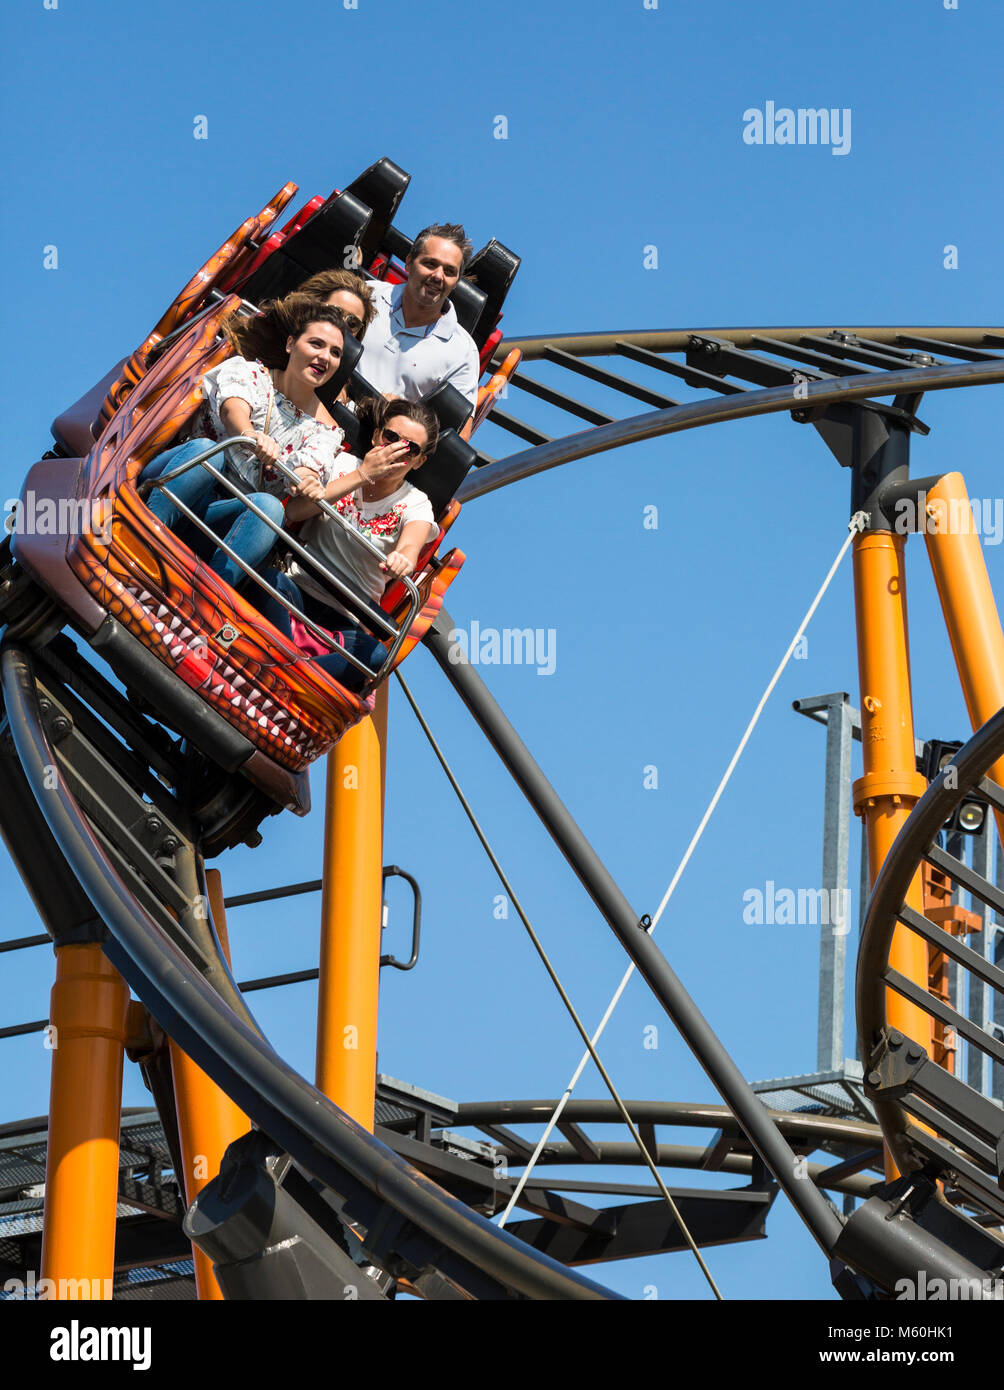 Rollercoaster ride, Prater amusement park, Leopoldstadt, Vienna, Austria. Stock Photo